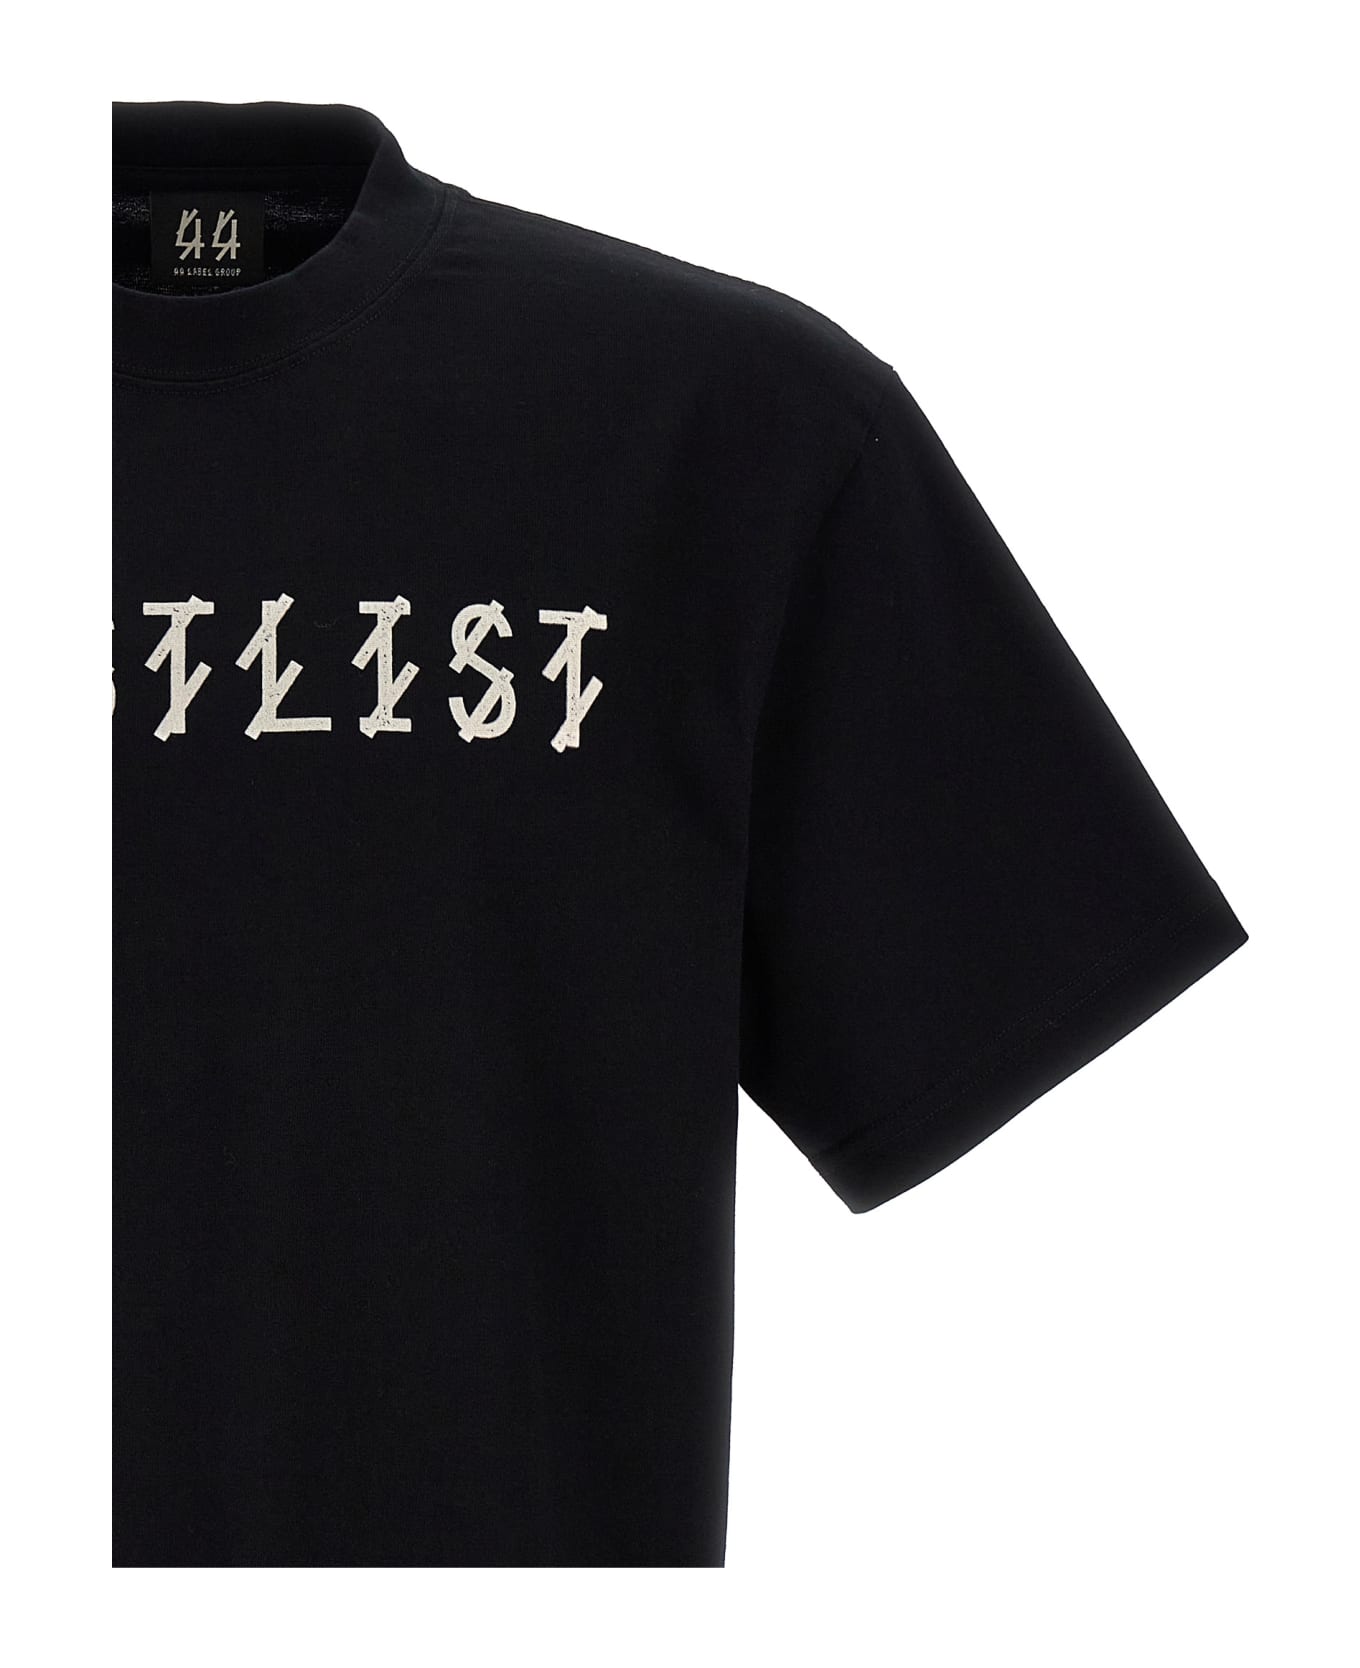 44 Label Group T-shirt Guestlist/berlin Sub' T-Shirt - BLACK シャツ